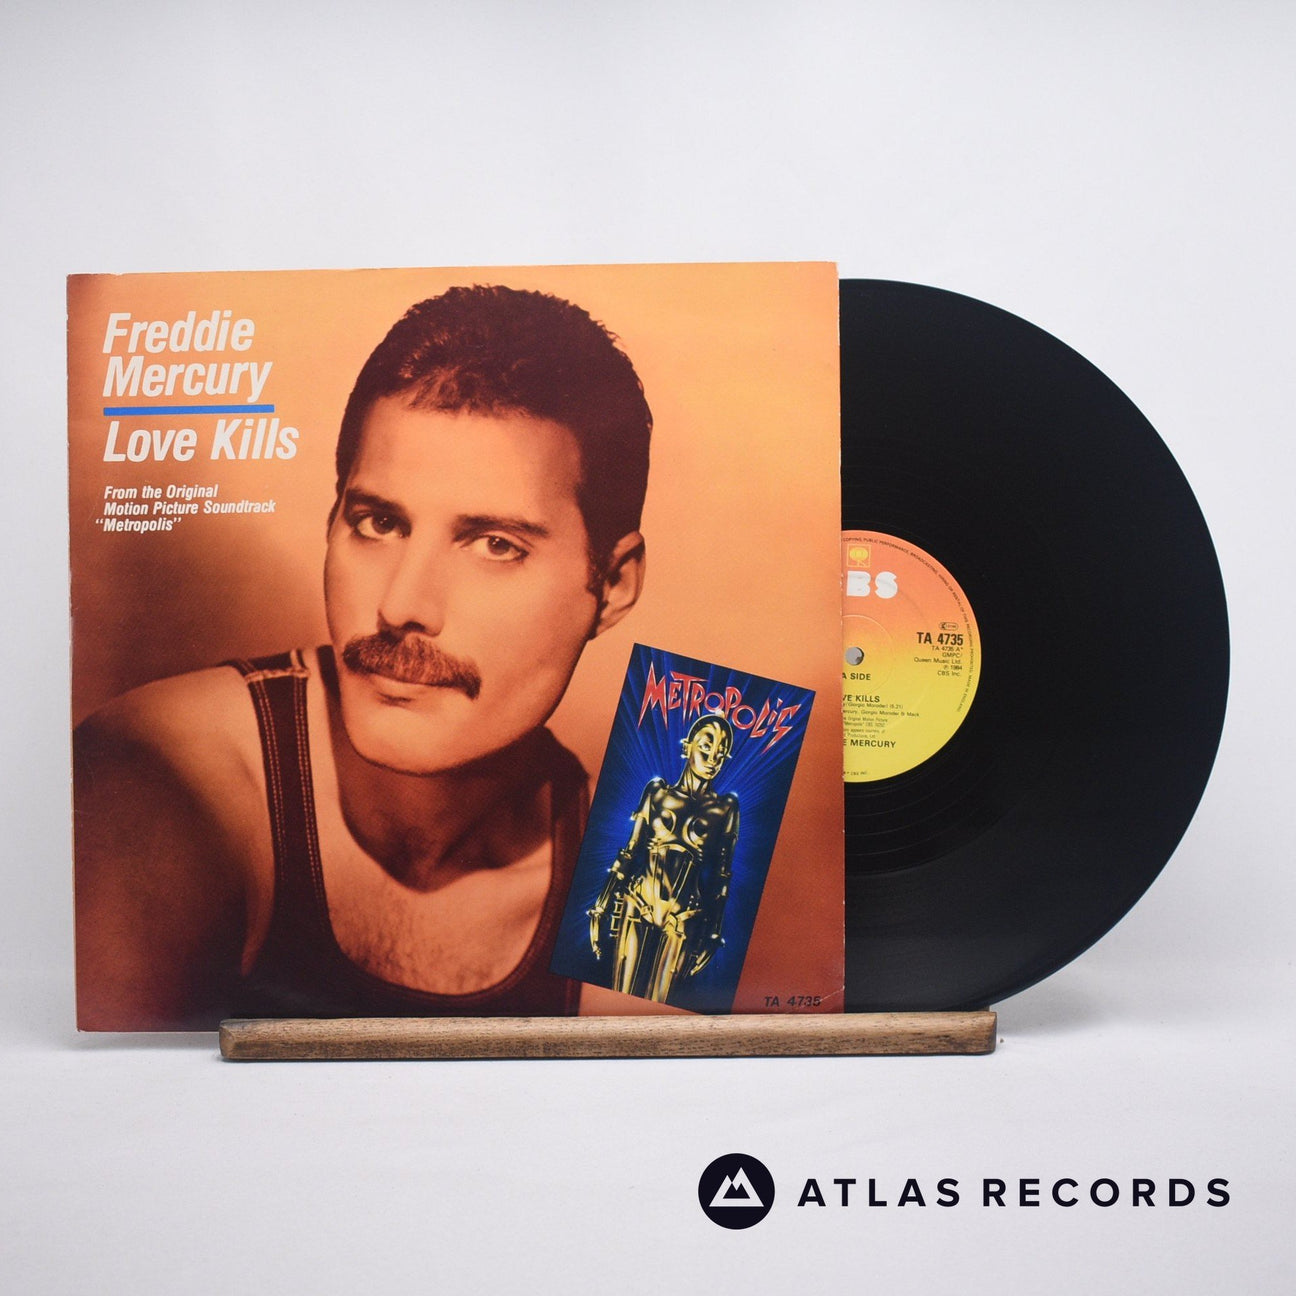 Freddie Mercury Love Kills 12" Vinyl Record - Front Cover & Record